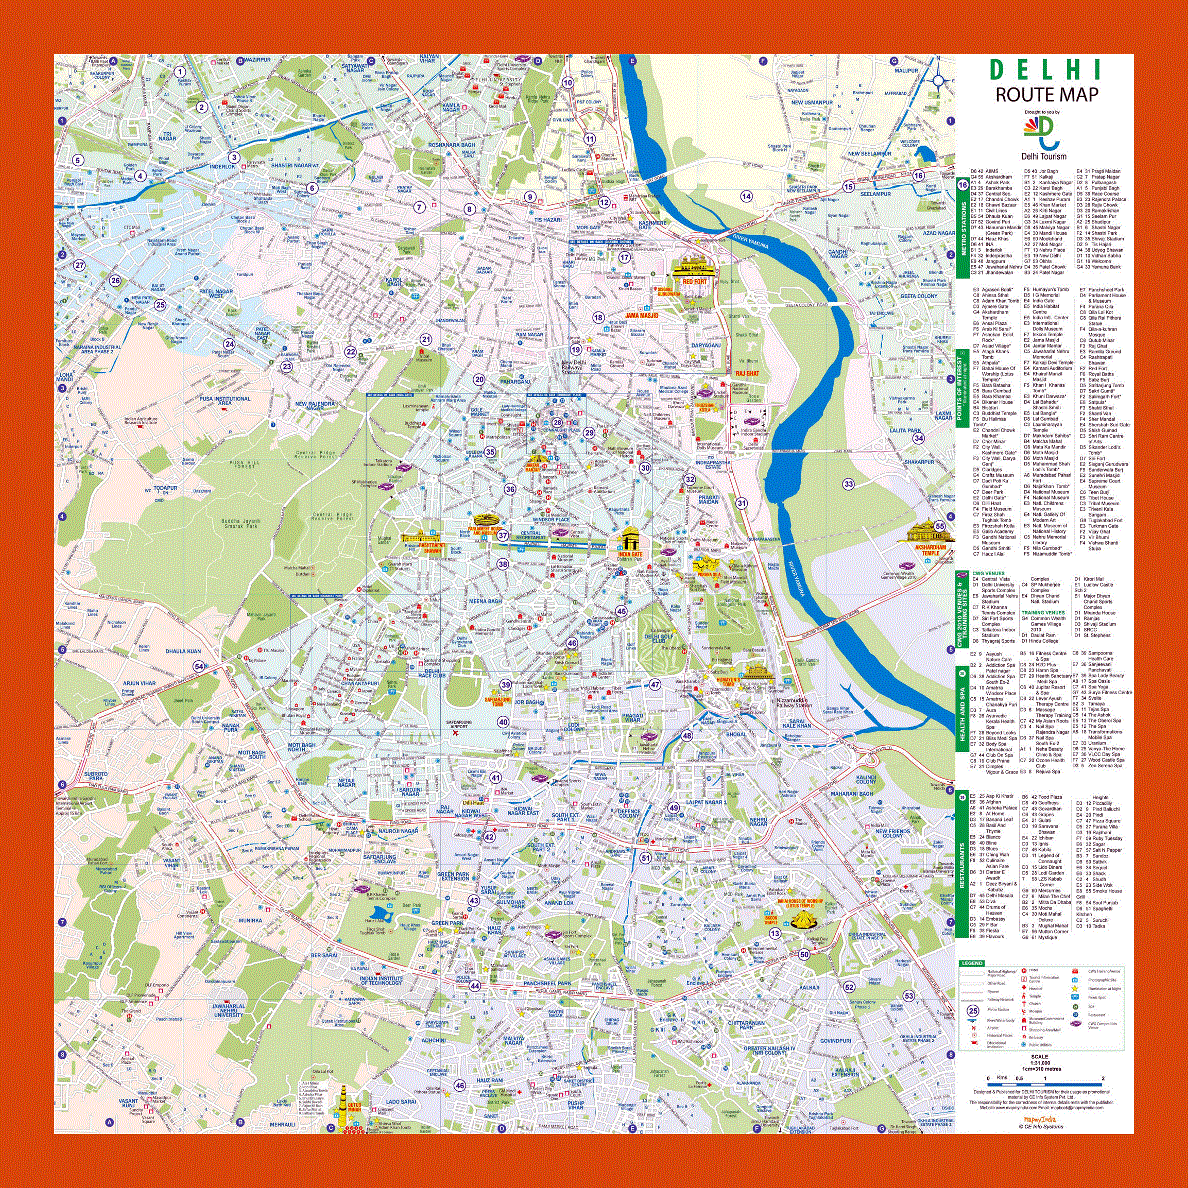 Route map of Delhi city